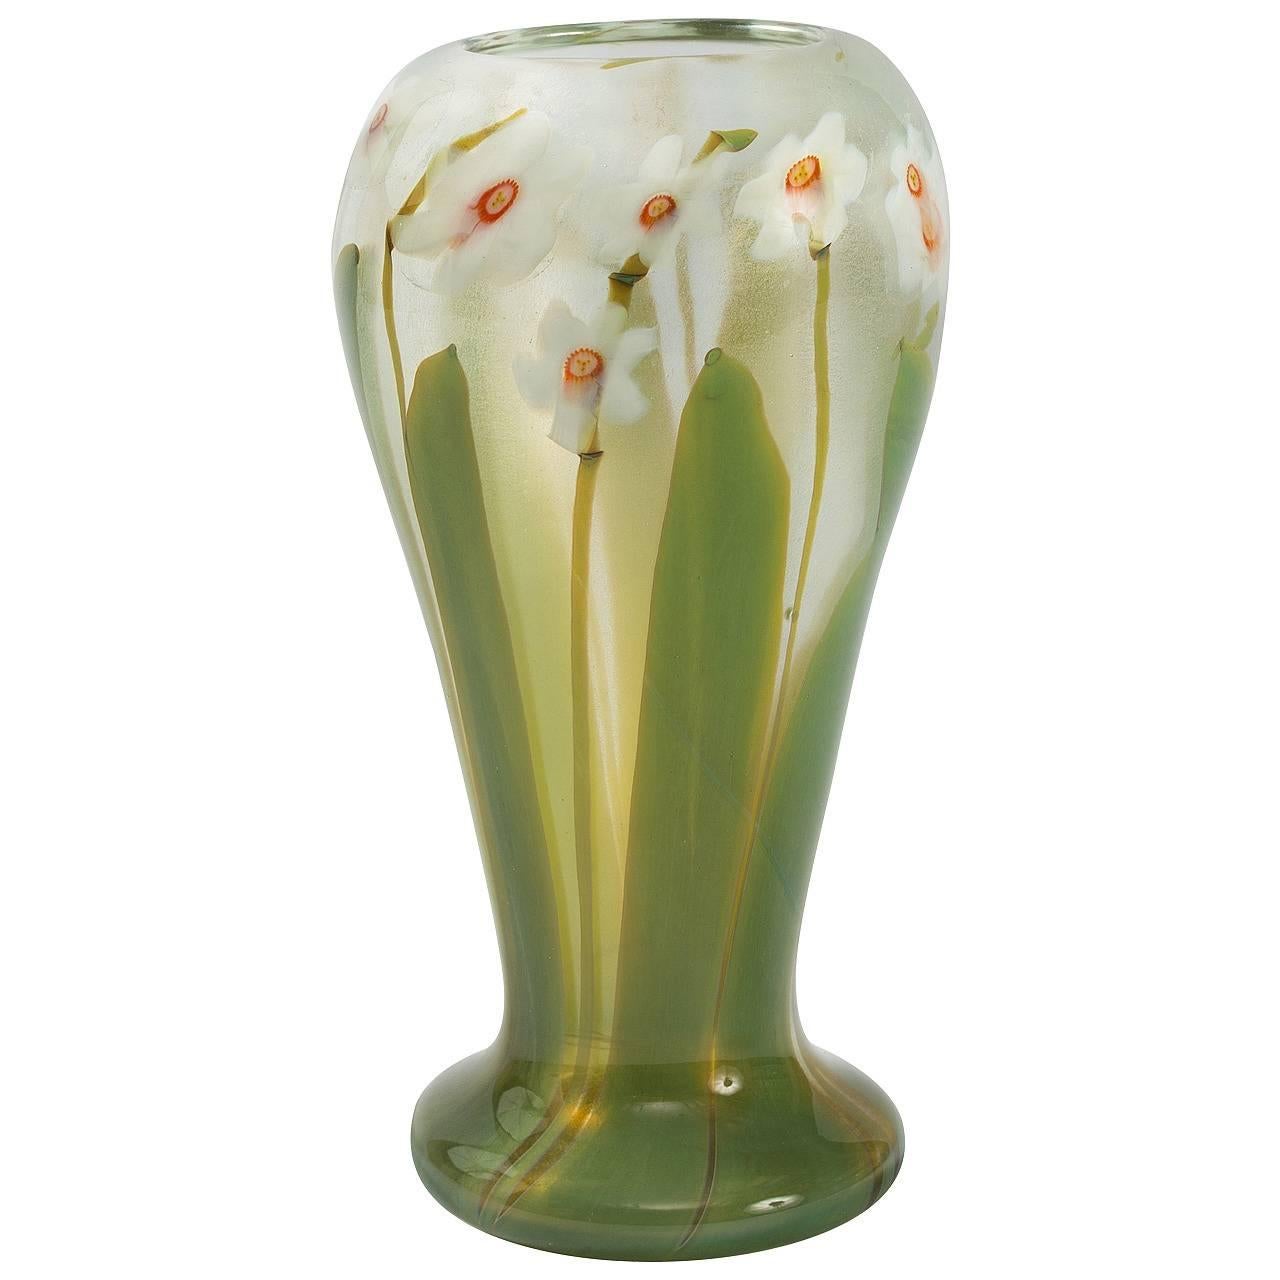 Tiffany Studios New York Glass "Paperweight" Vase